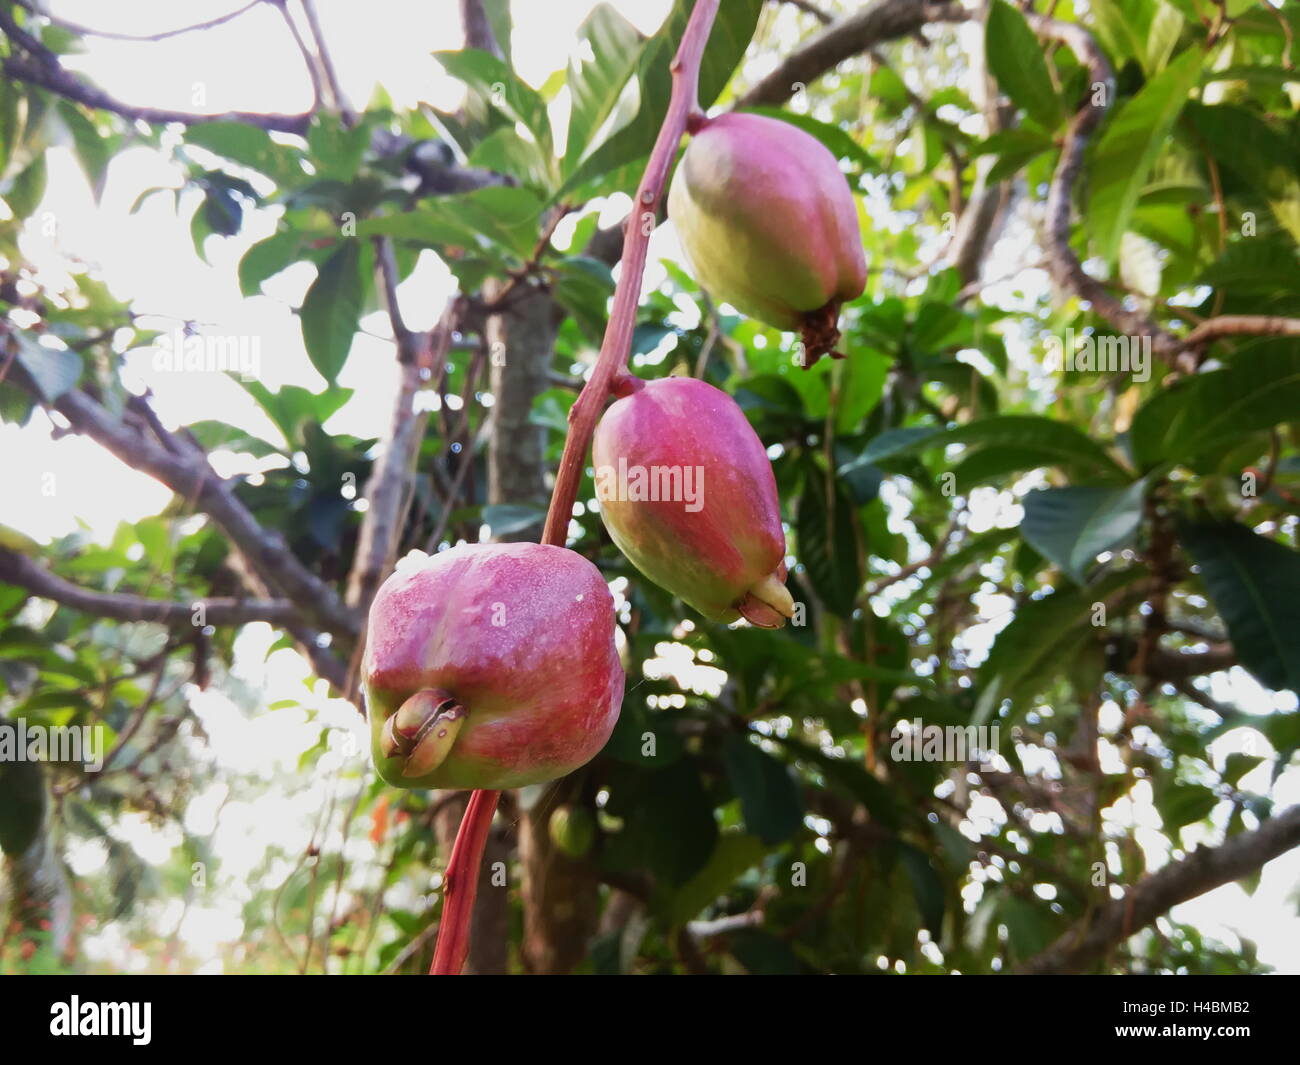 jamaican rose apple